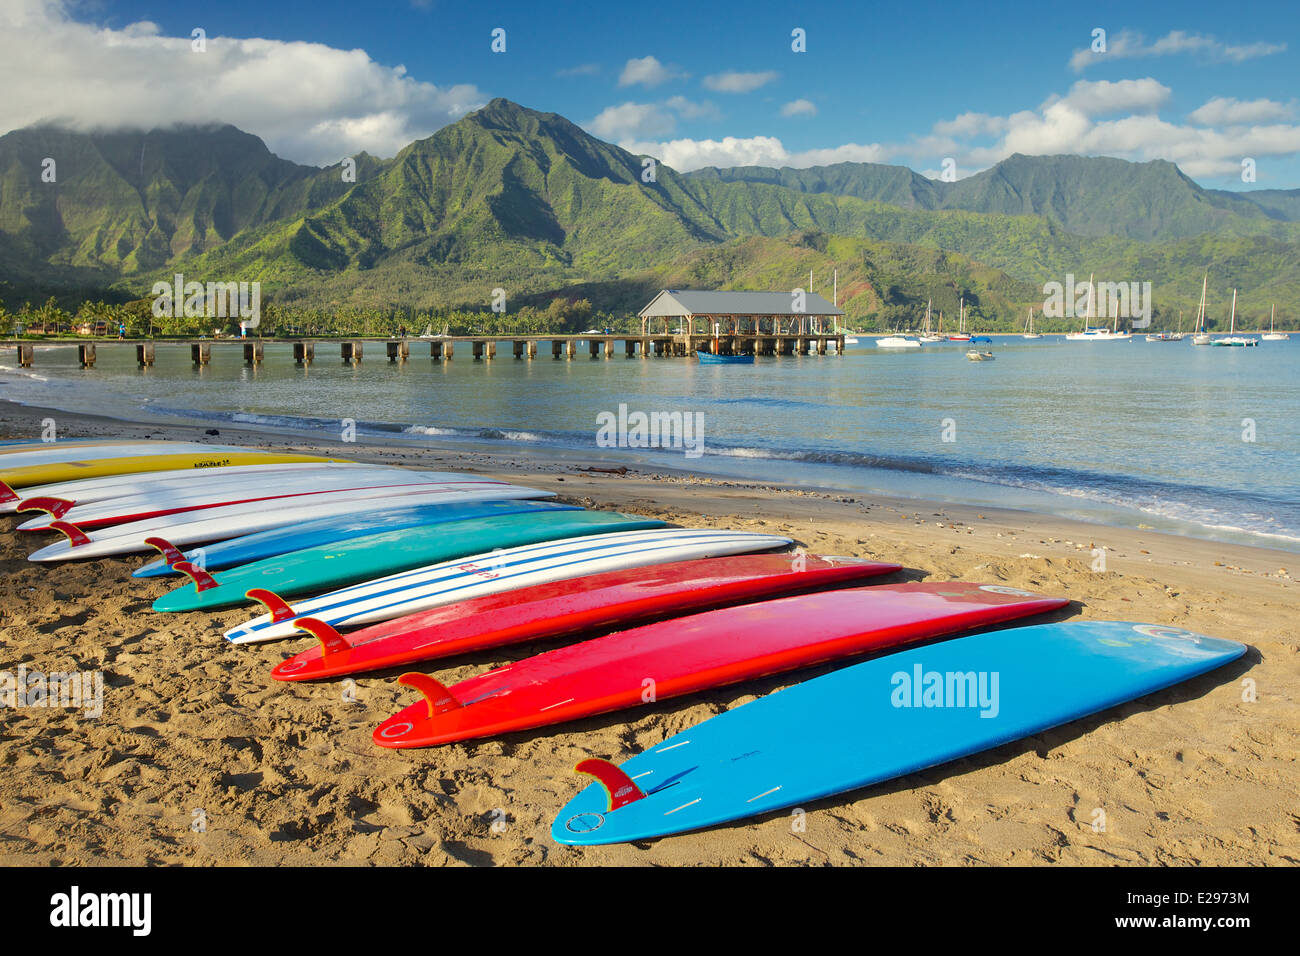 Surf boards on the beach at Hanalei Bay in Kauai, the Garden Isle of Hawaii Stock Photo